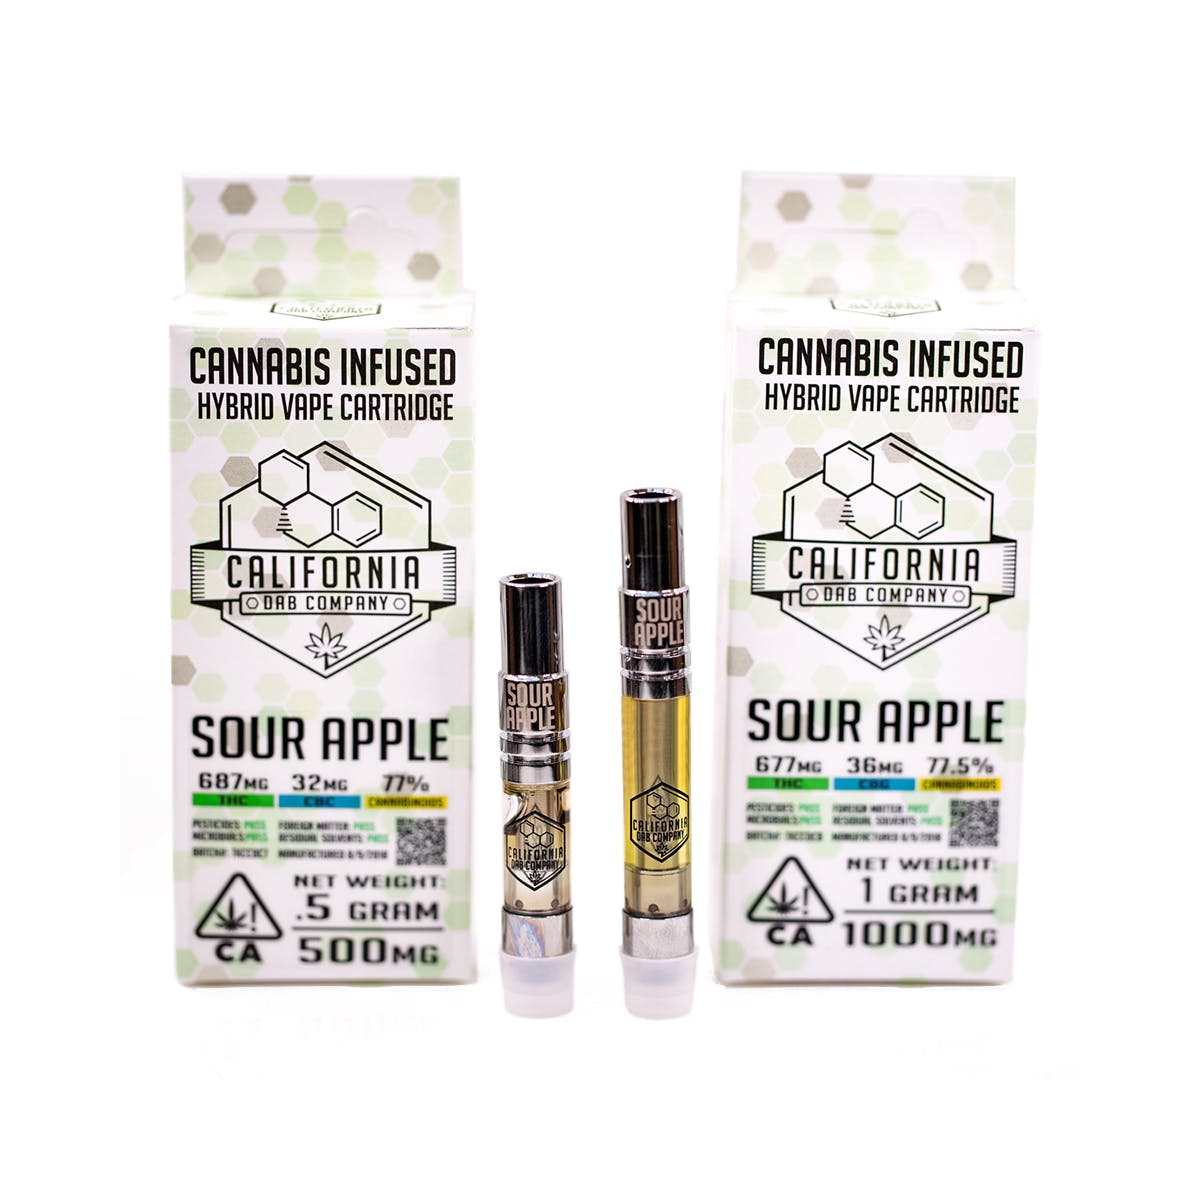 marijuana-dispensaries-laxcc-21-2b-in-los-angeles-sour-apple-vape-cartridge